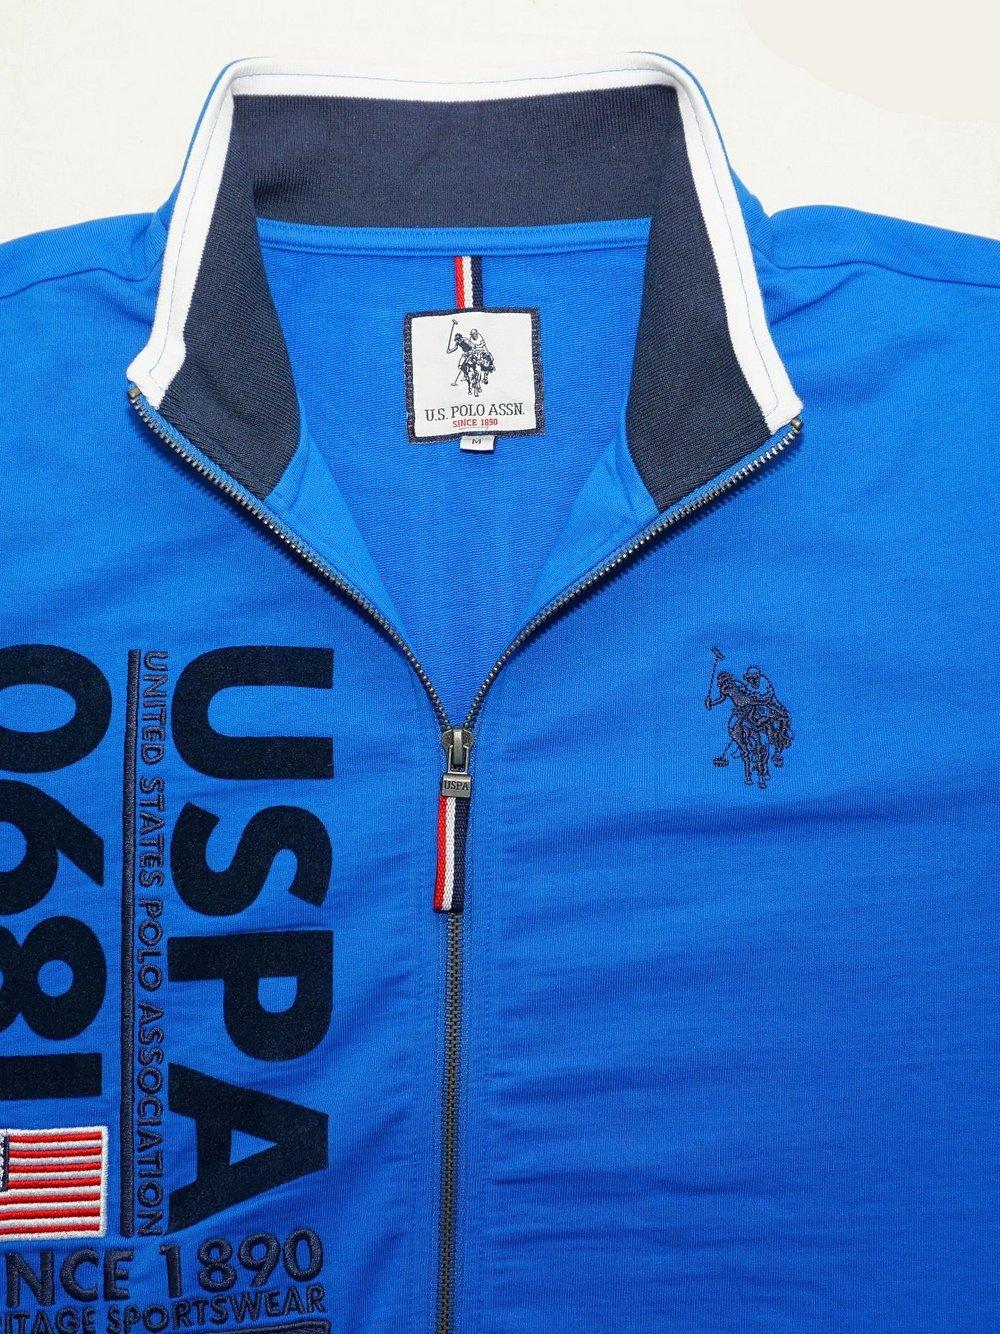 U.S. Polo Assn. Sweatjacke Herren Baumwolle bedruckt, blau von U.S. Polo Assn.